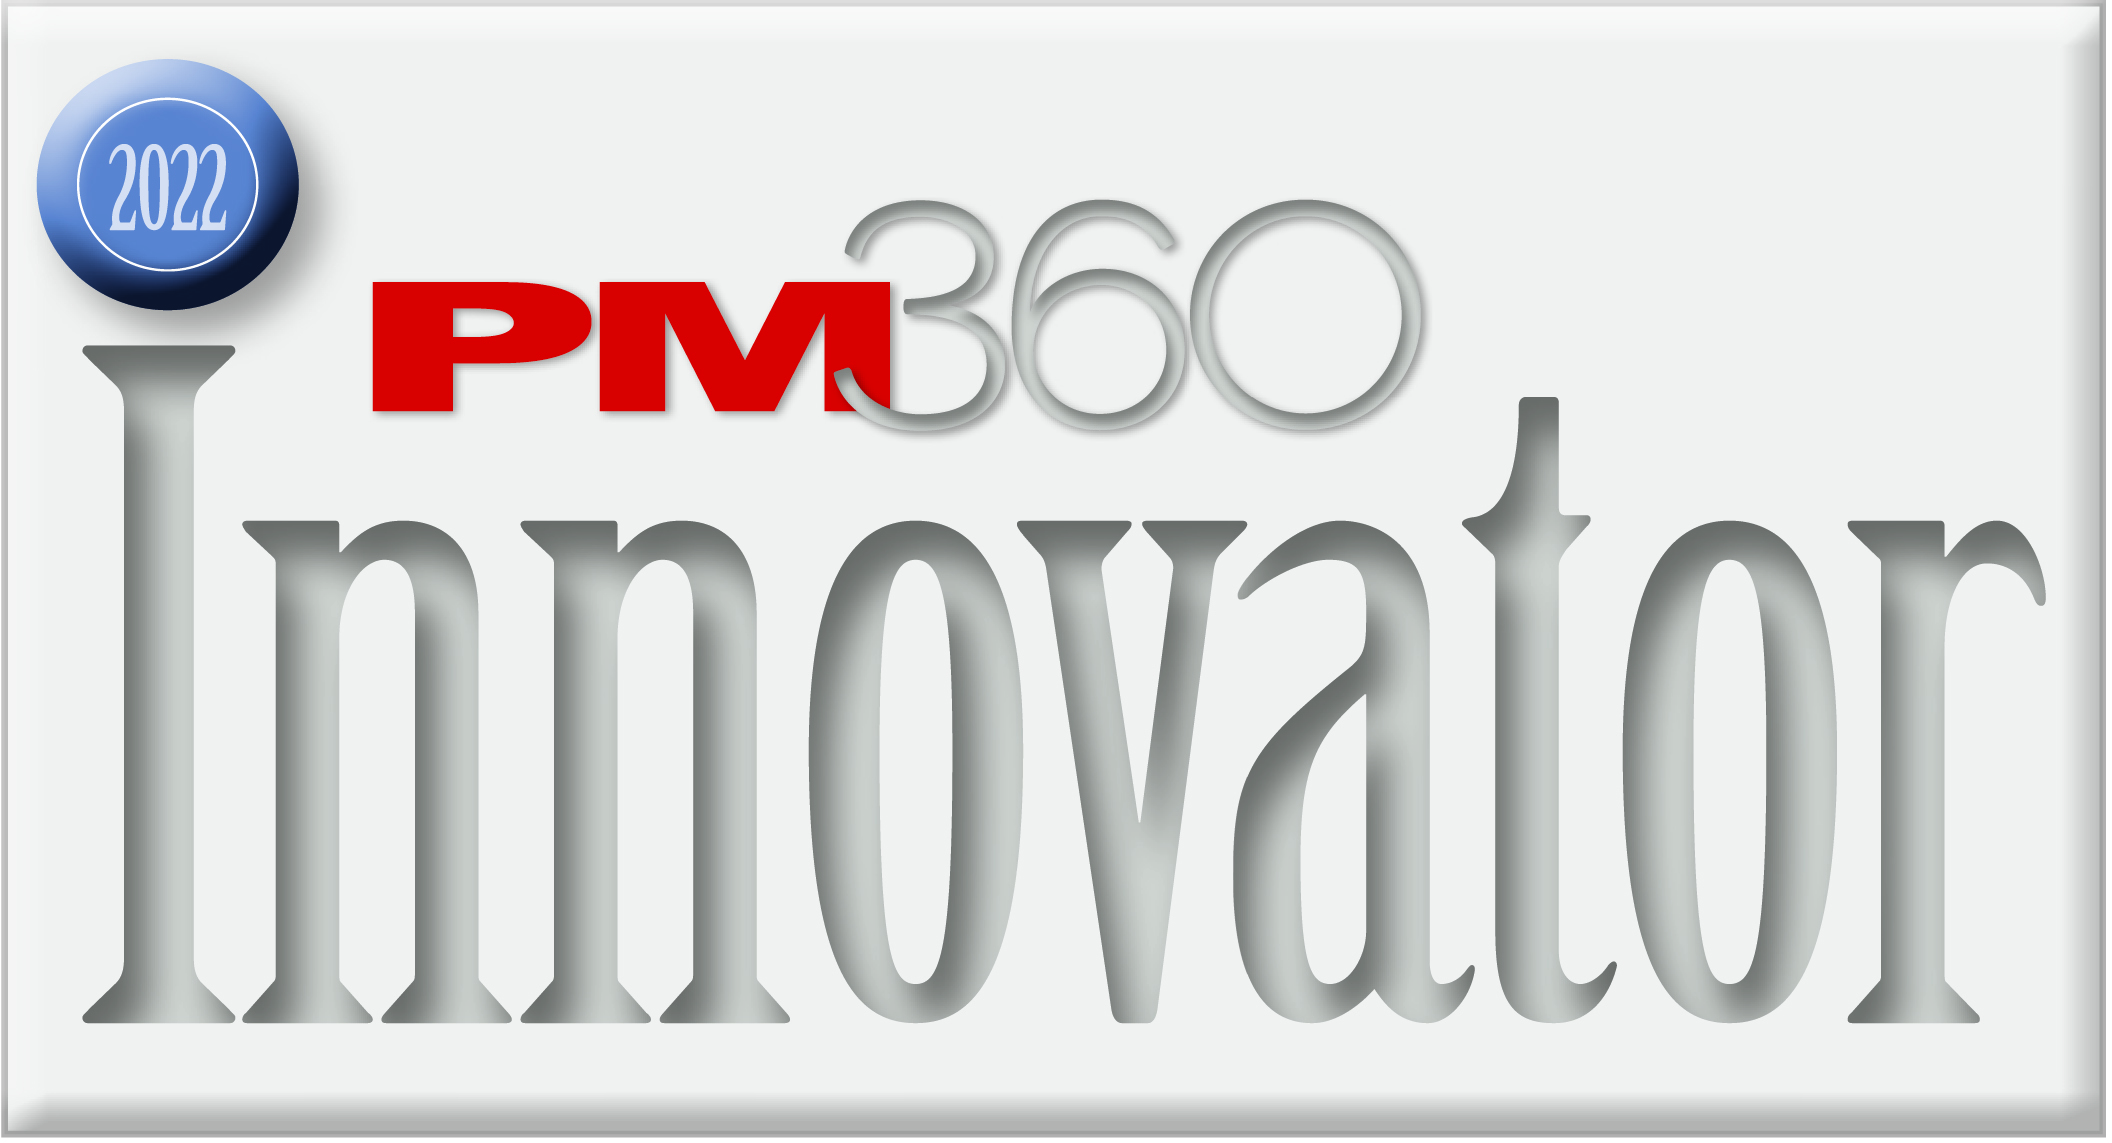 PM360 Innovations 2022